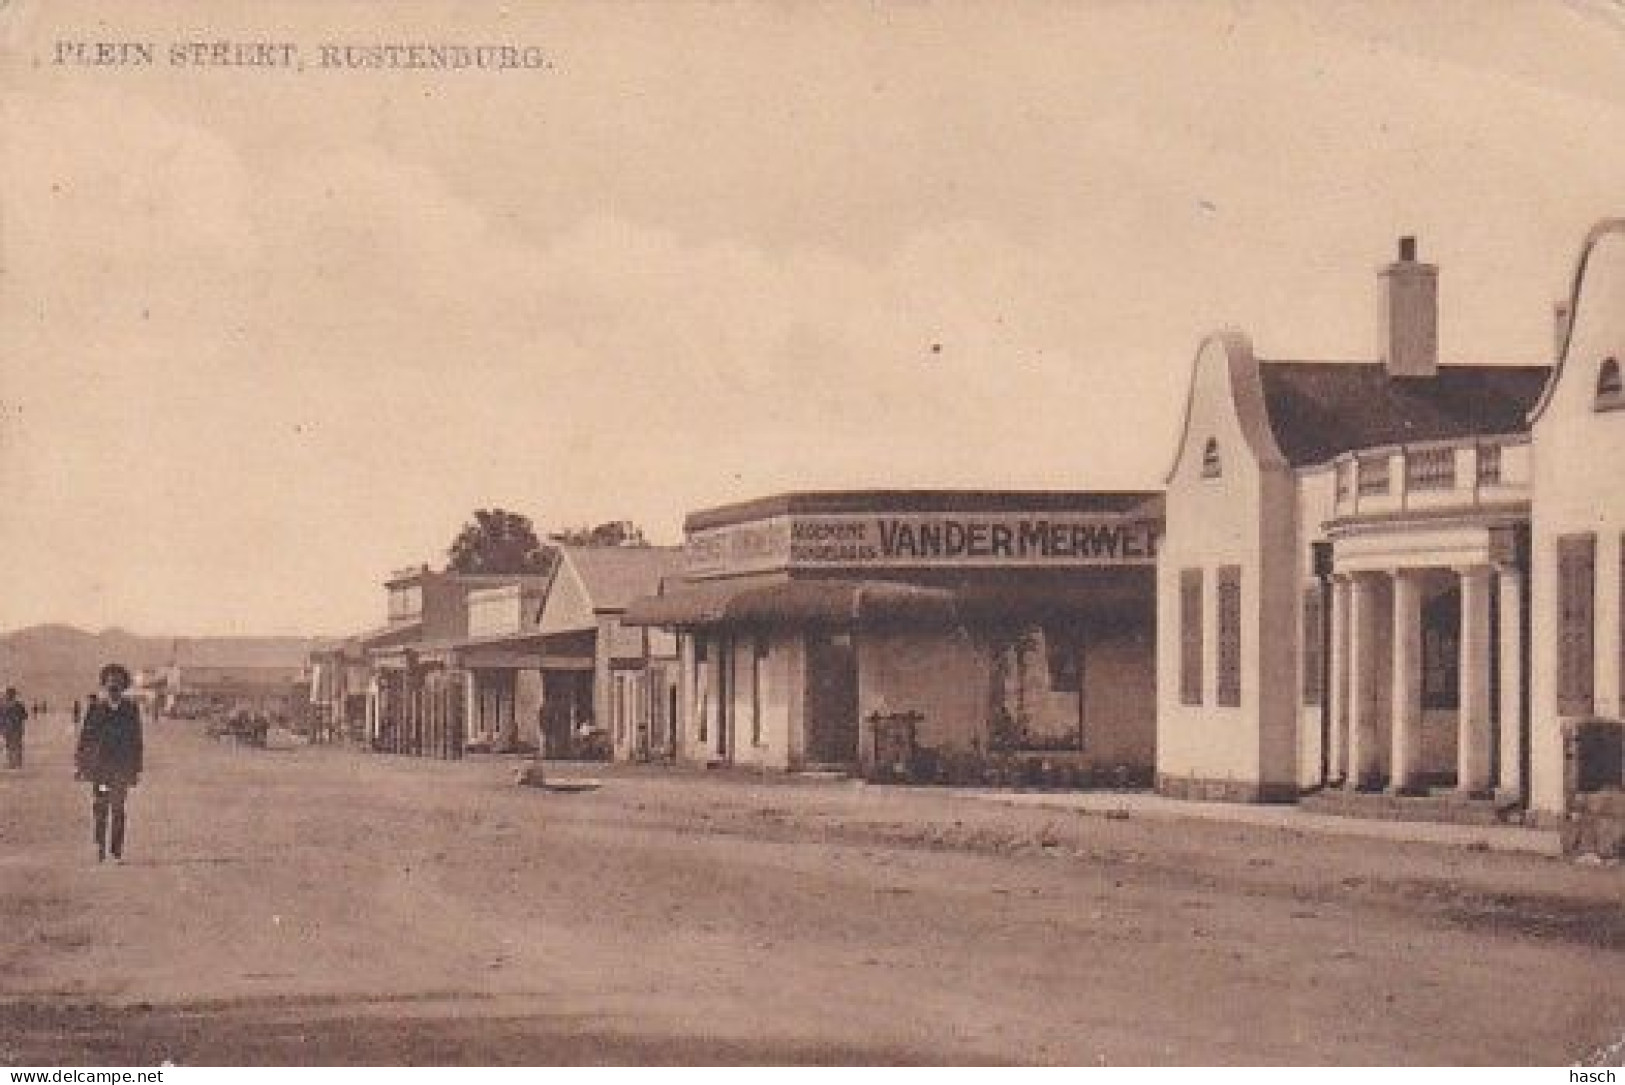 1830	45	Rustenburg, Plein Street (see Corners, See Bottom) - Afrique Du Sud